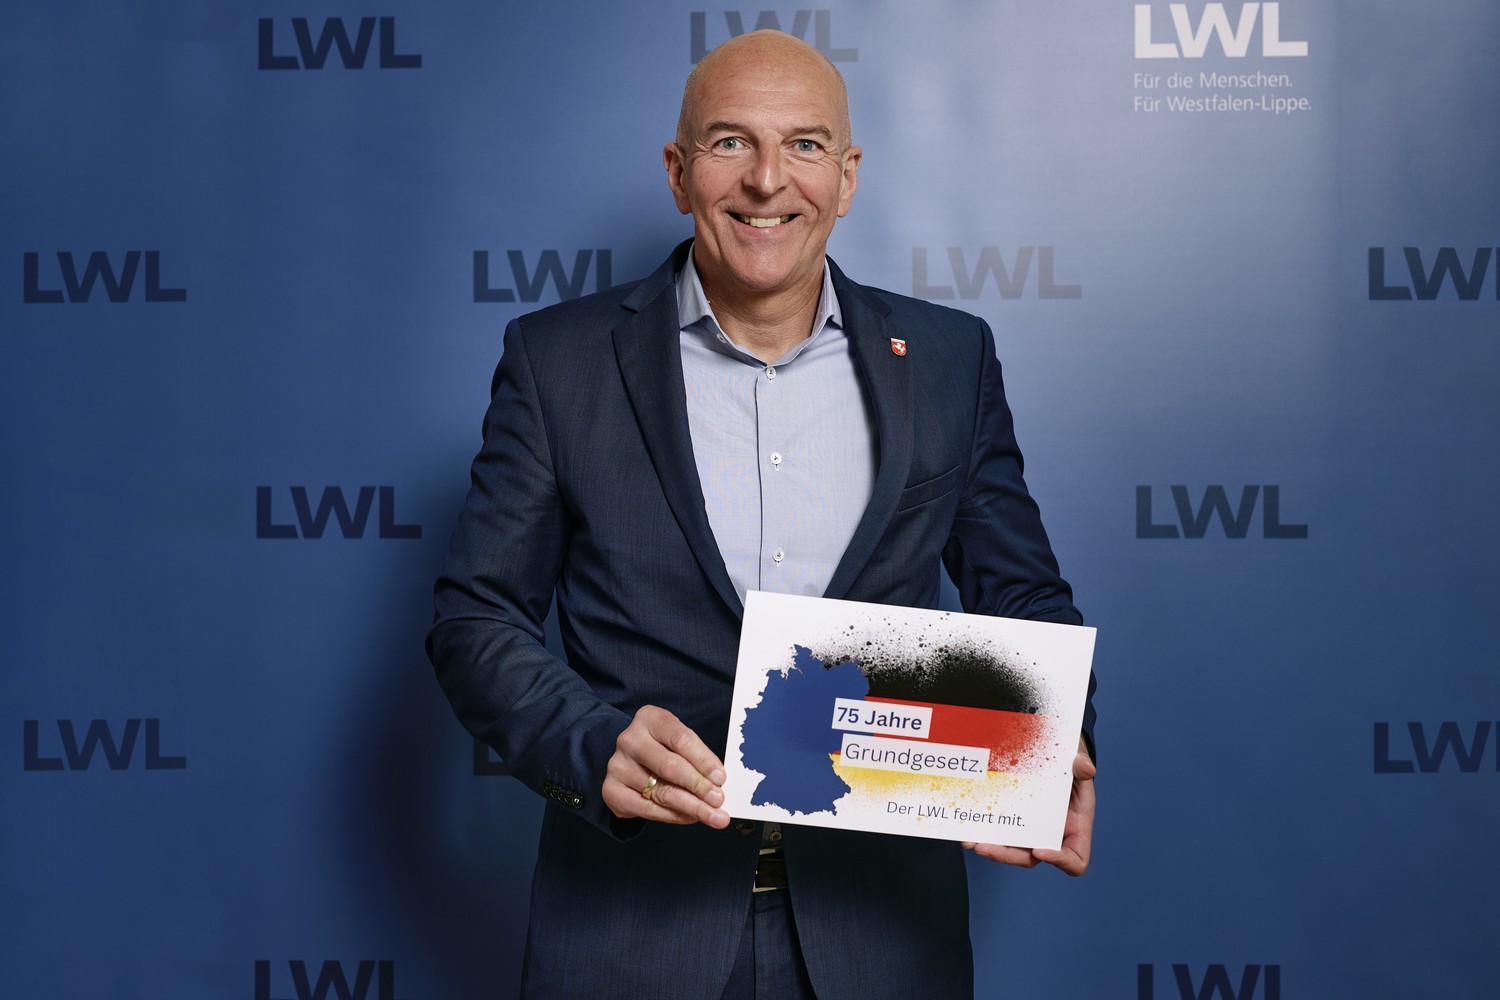 LWL-Direktor Dr. Georg Lunemann